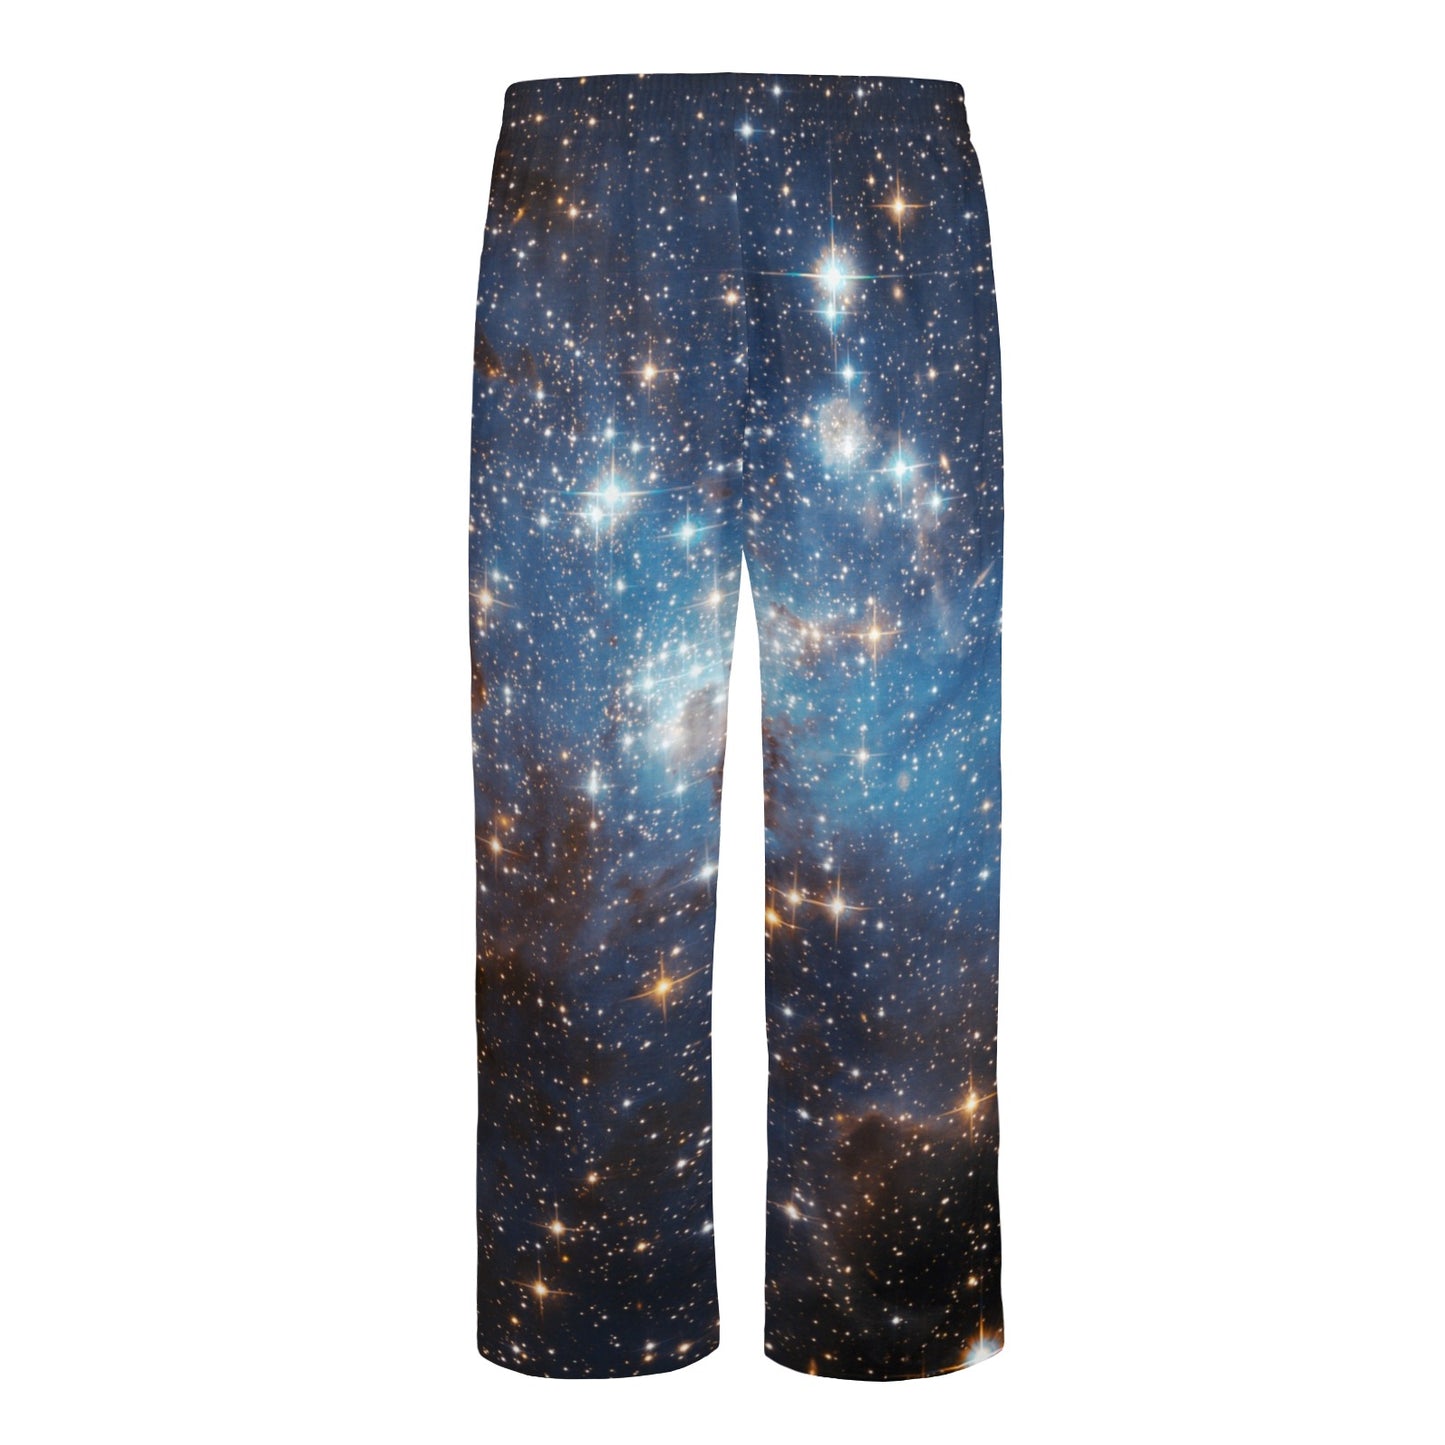 Galaxy Space Men Pajamas Pants, Universe Blue Satin PJ Pockets Sleep Lounge Trousers Couples Matching Trousers Bottoms